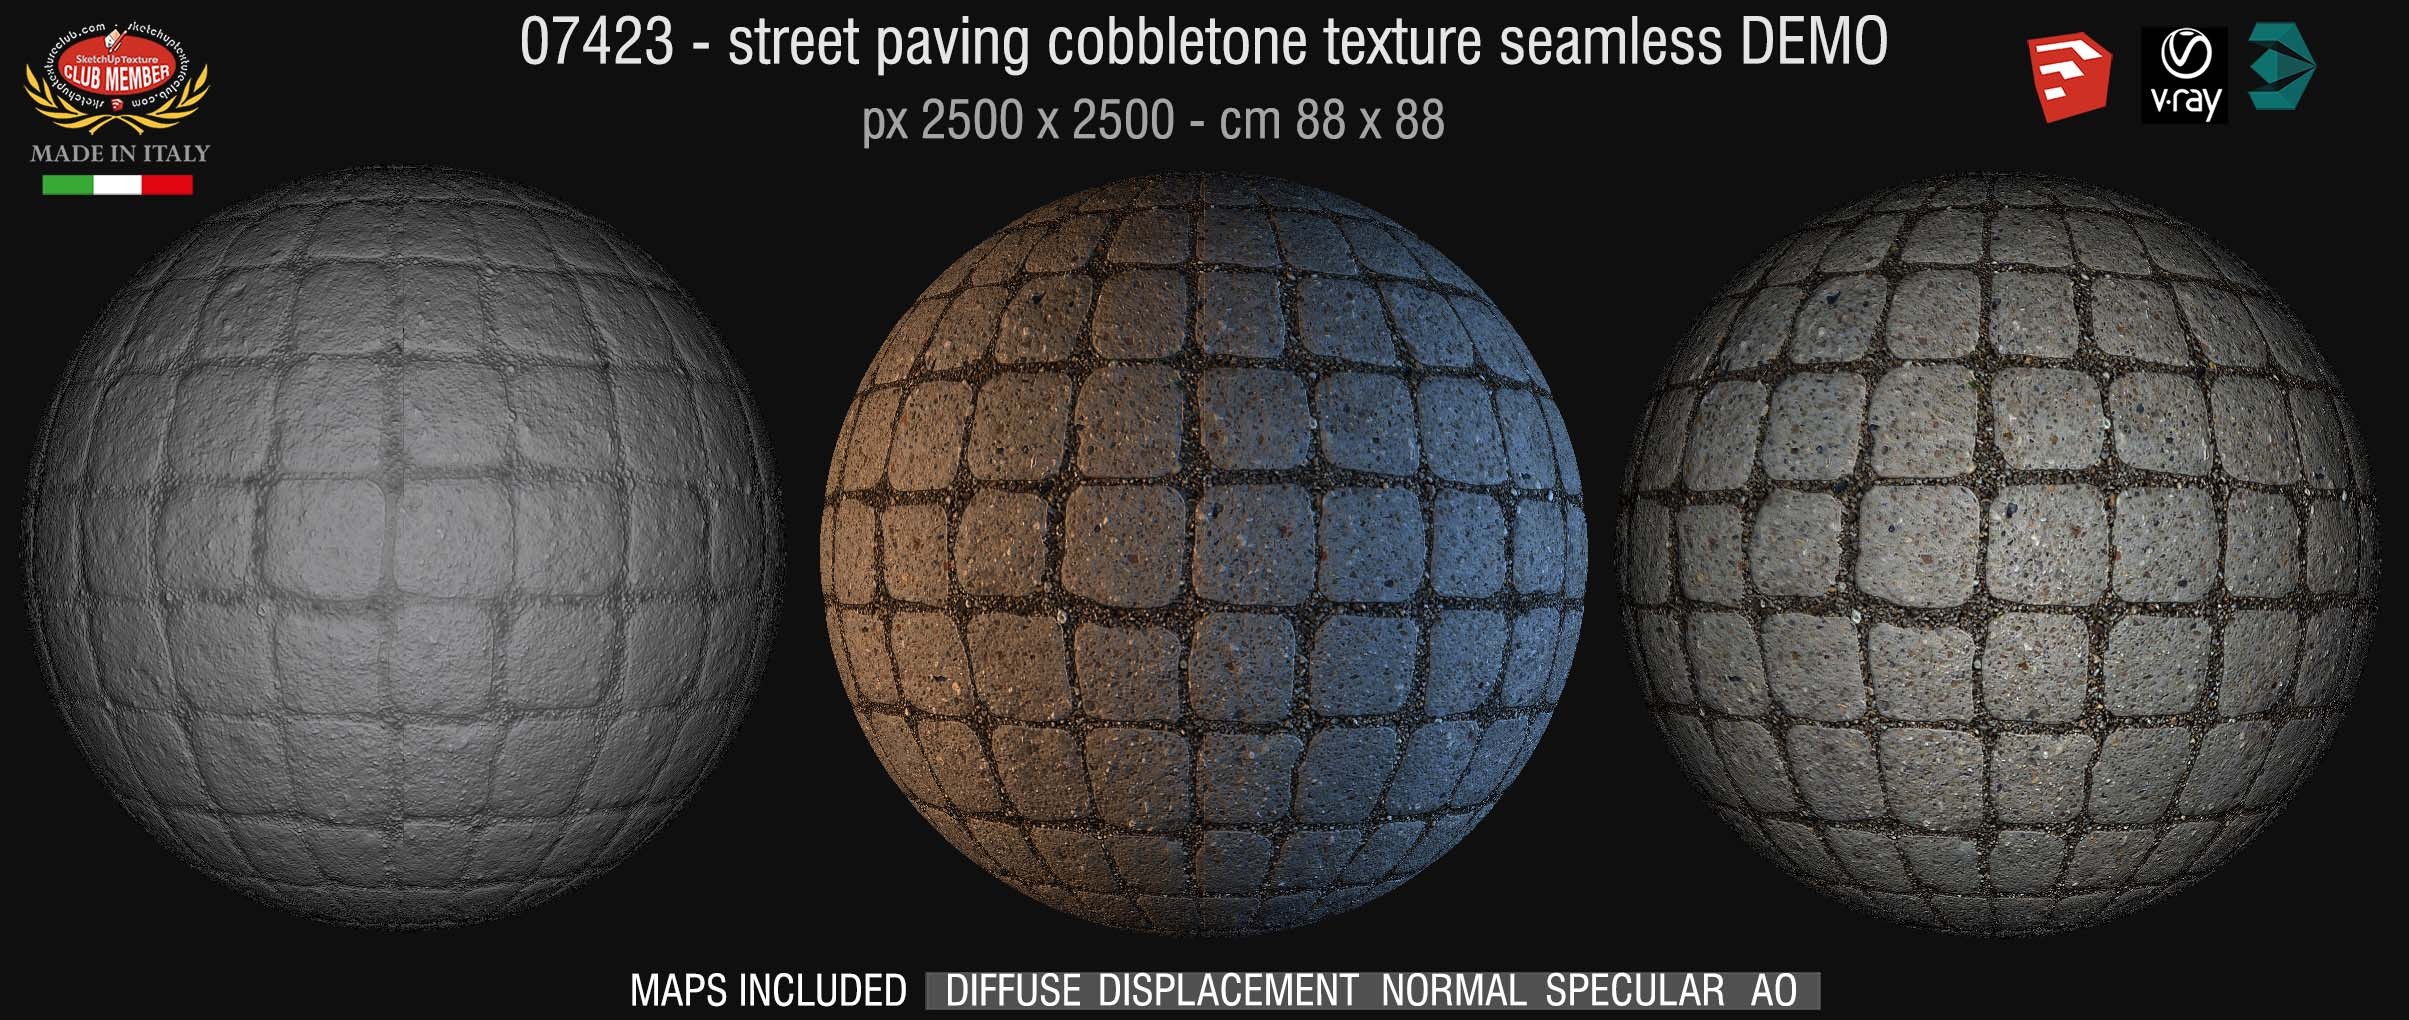 07423 HR Street paving cobblestone texture + maps DEMO